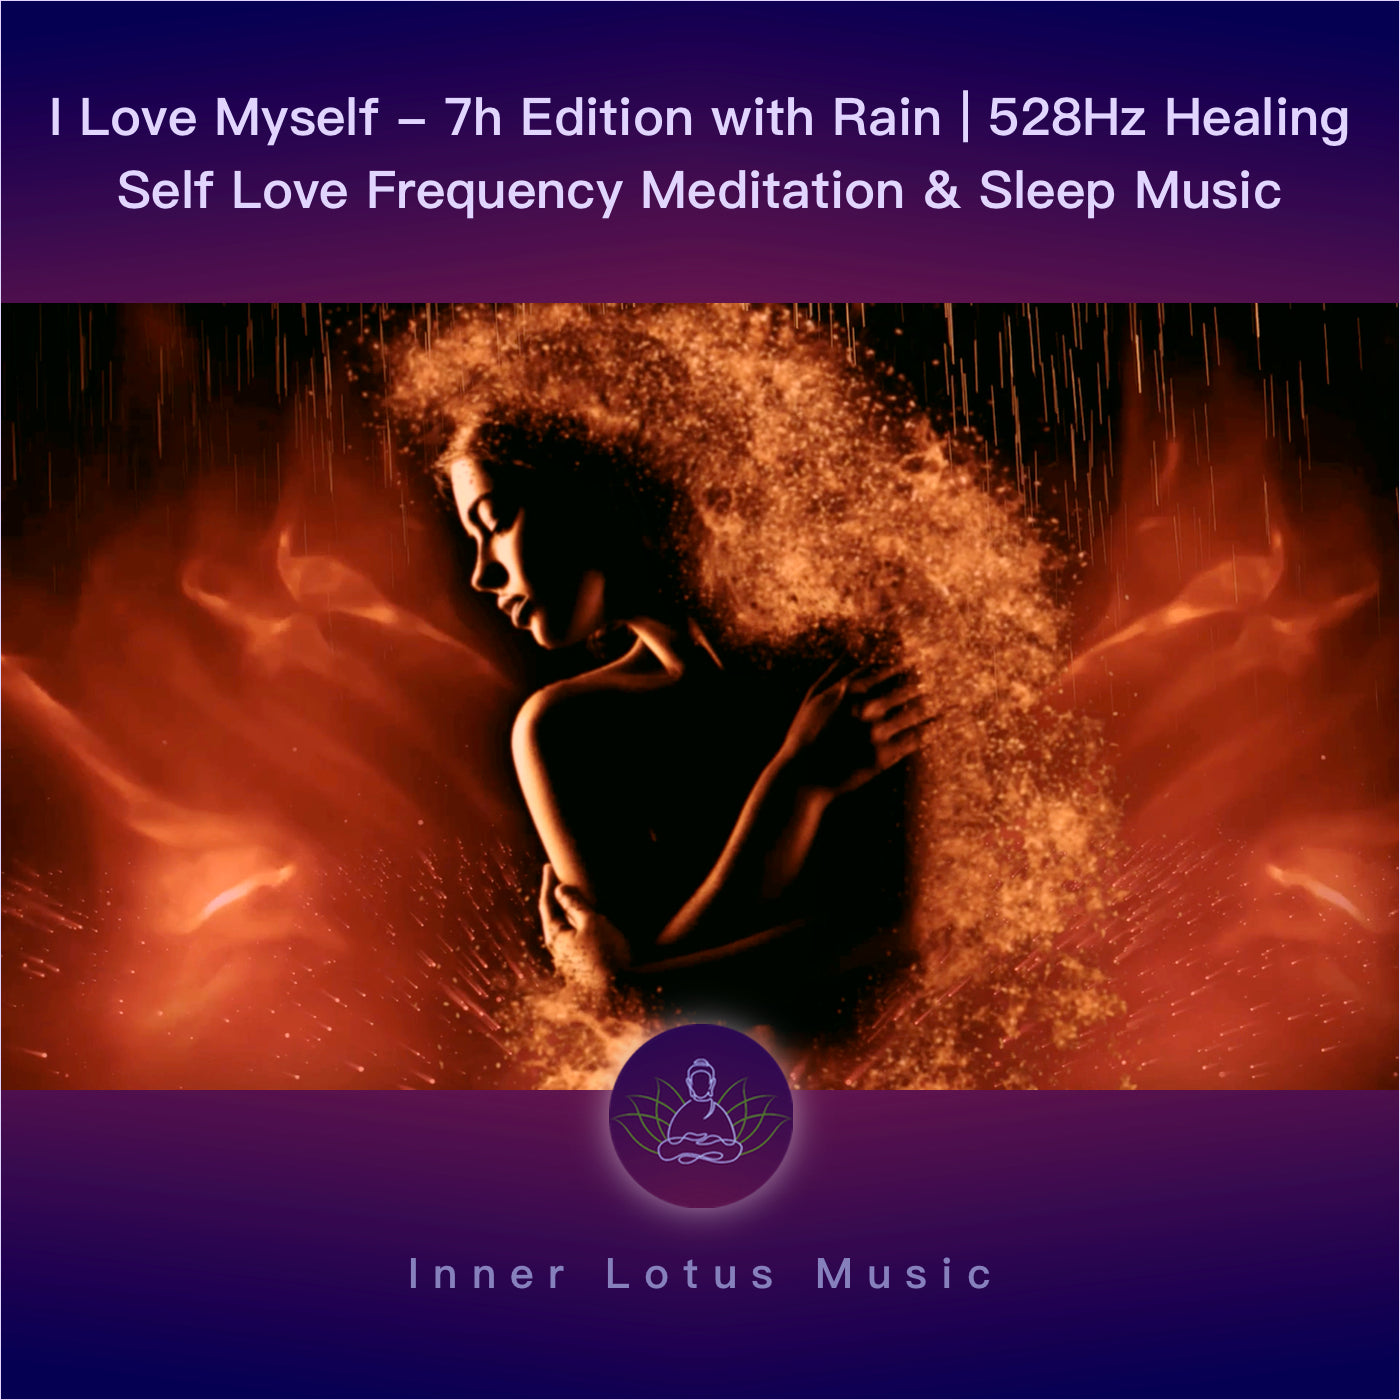 I Love Myself - 7h Edition with Rain | 528Hz Healing Self Love Frequency Meditation & Sleep Music